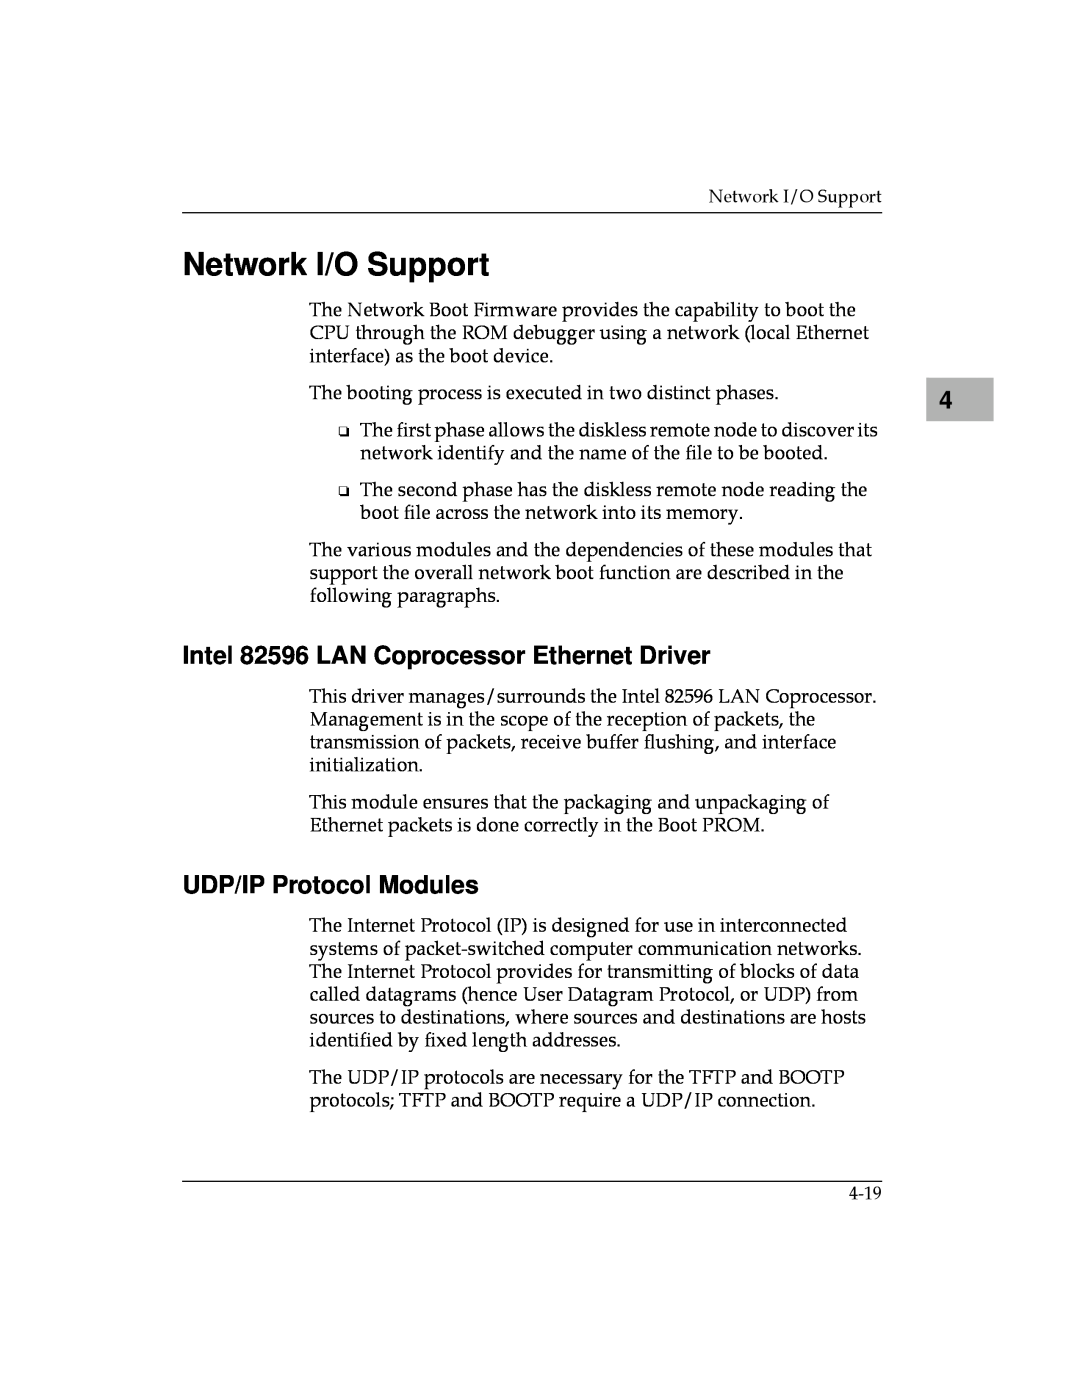 Motorola MVME187 manual Network I/O Support, Intel 82596 LAN Coprocessor Ethernet Driver, UDP/IP Protocol Modules 